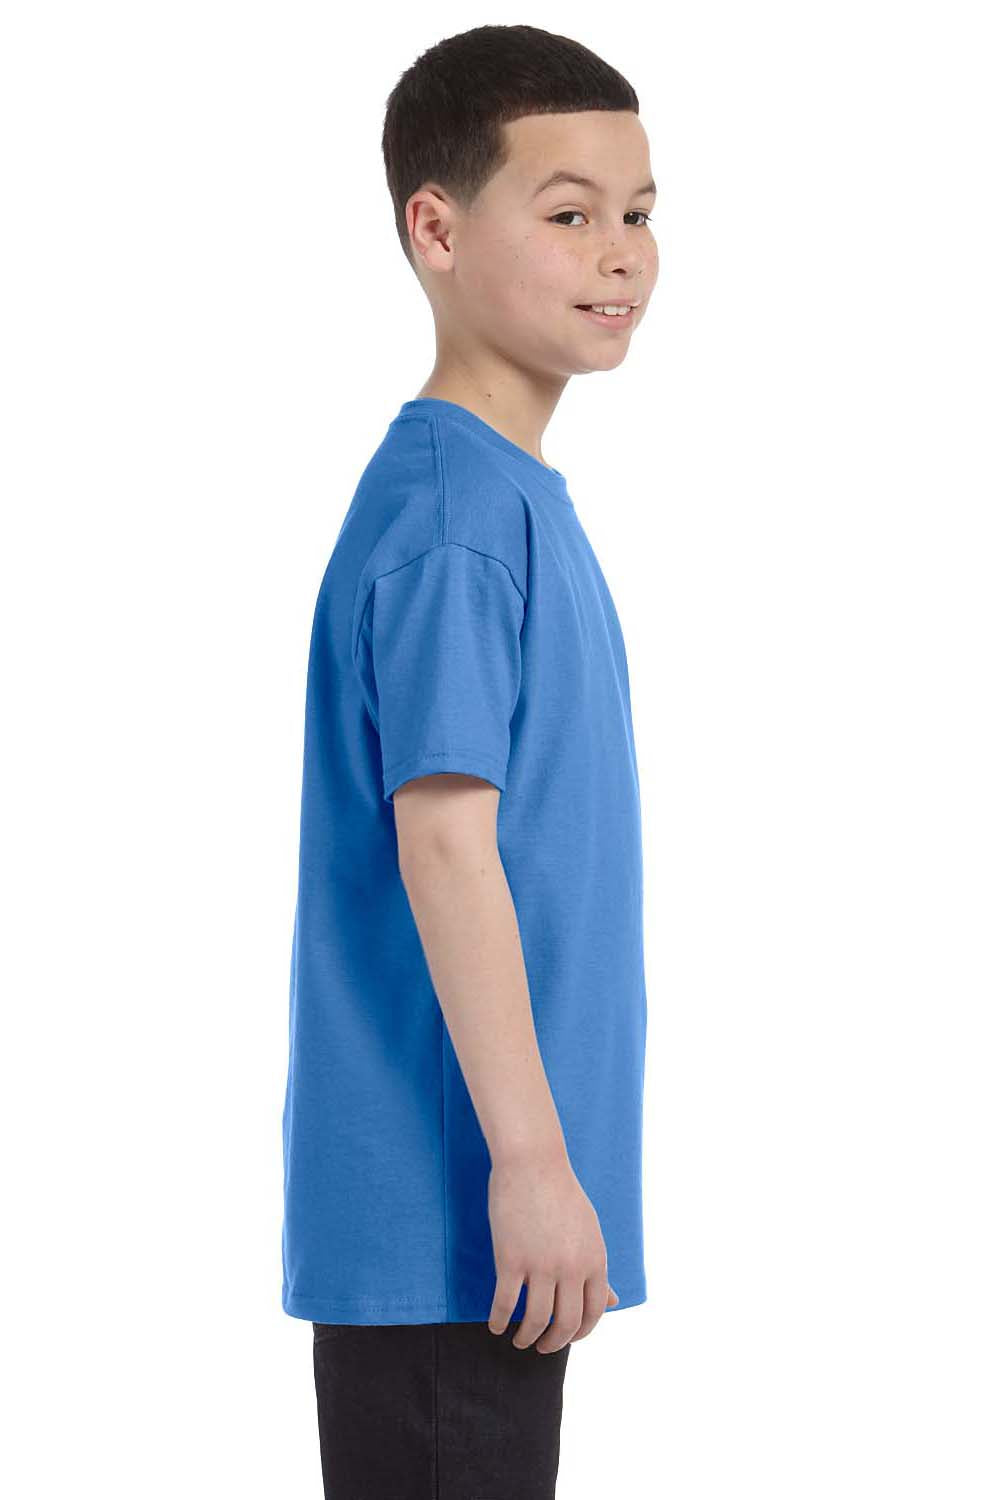 Jerzees 29B Youth Dri-Power Moisture Wicking Short Sleeve Crewneck T-Shirt Columbia Blue Side